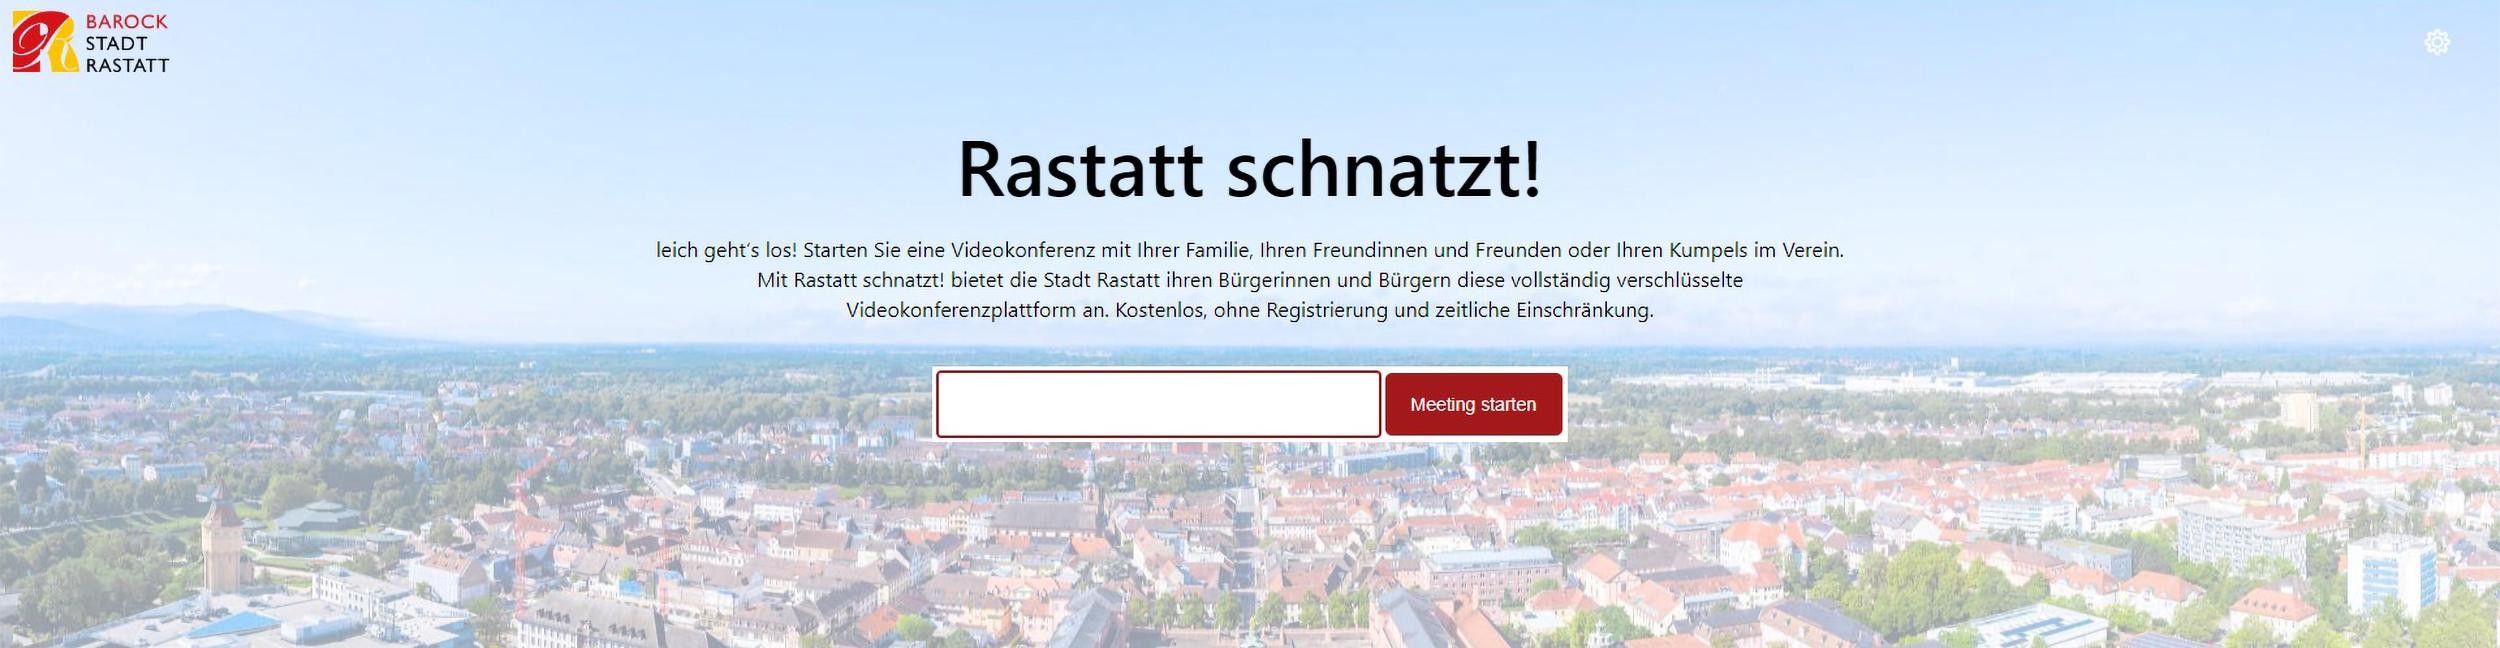 Capture d'écran de la plate-forme de vidéoconférence Rastatt schnatzt